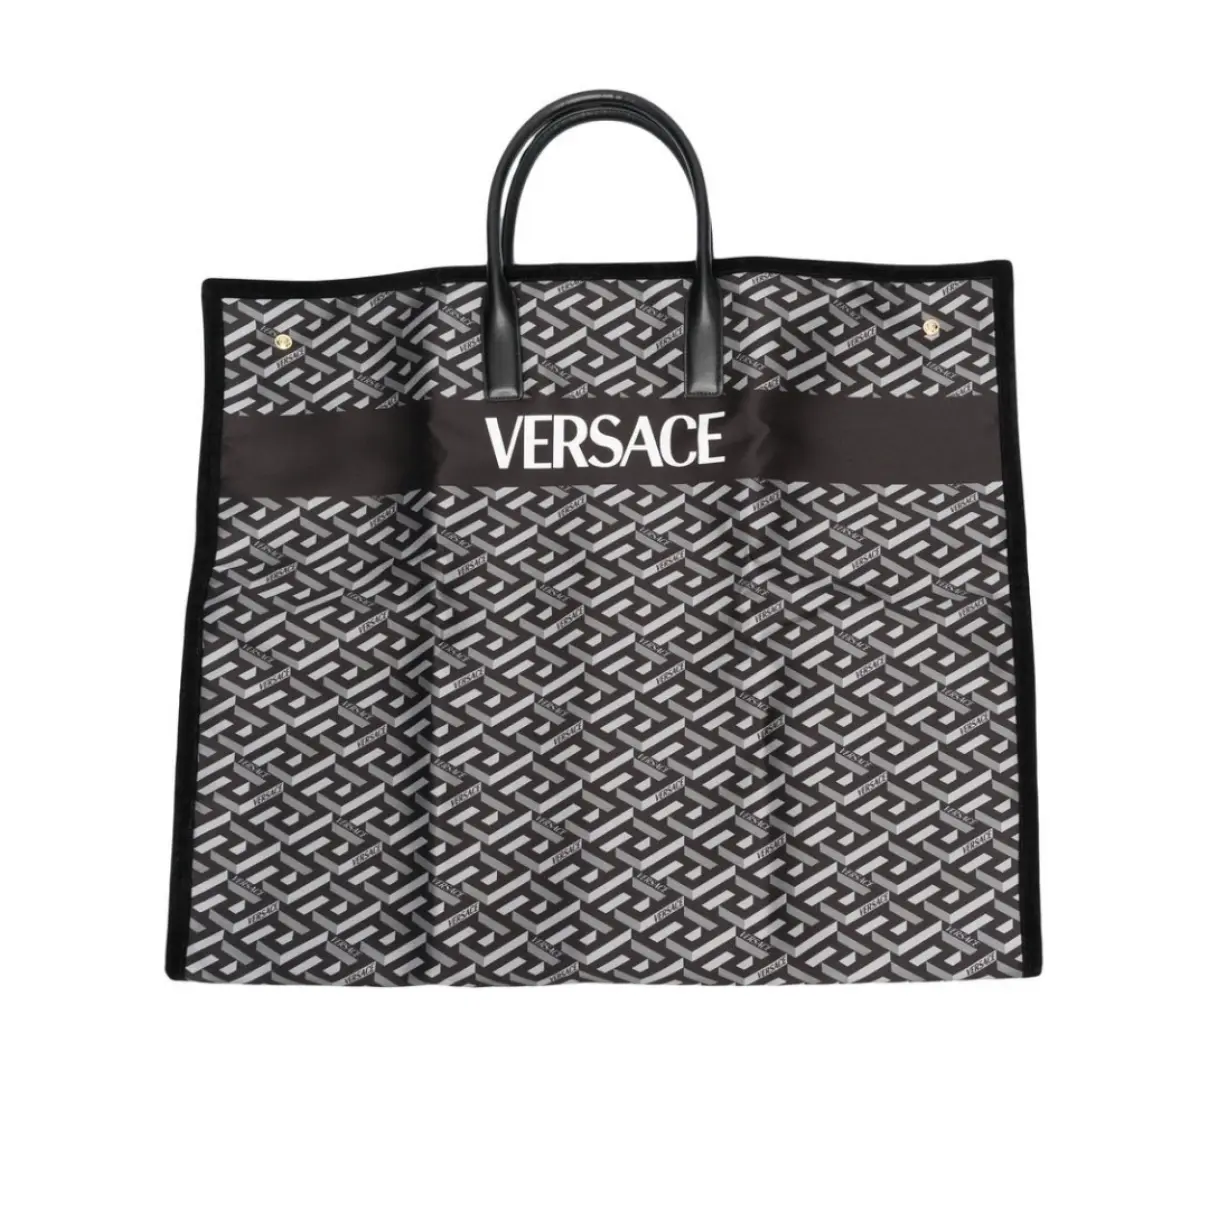 Buy Versace Tote online